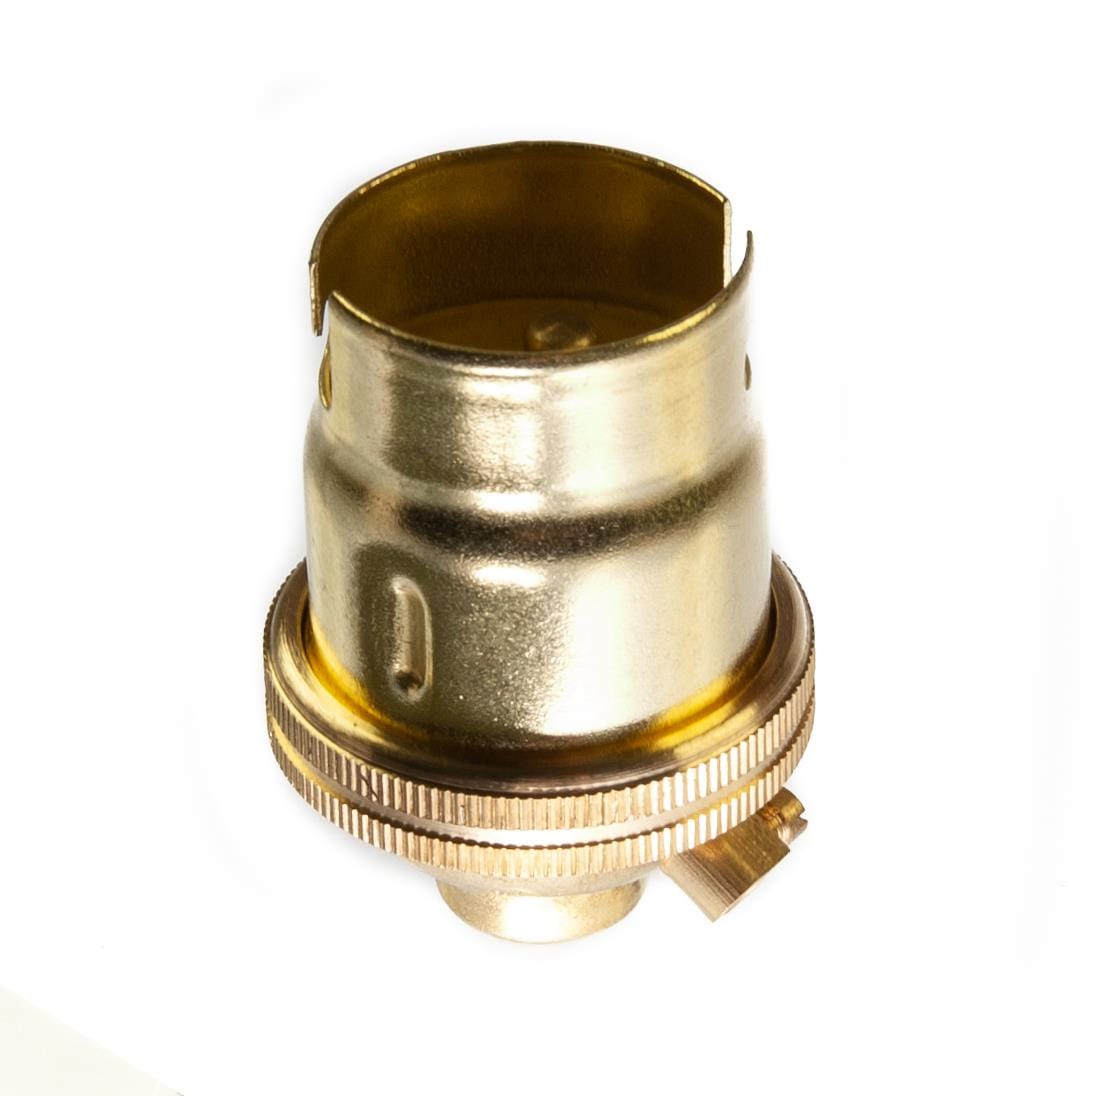 Brass Lamp Holder Bayonet Cap (BC) (B22d) Fitting No Shade Ring 10mm Screw Thread Plain Lampholders Unbranded 901540